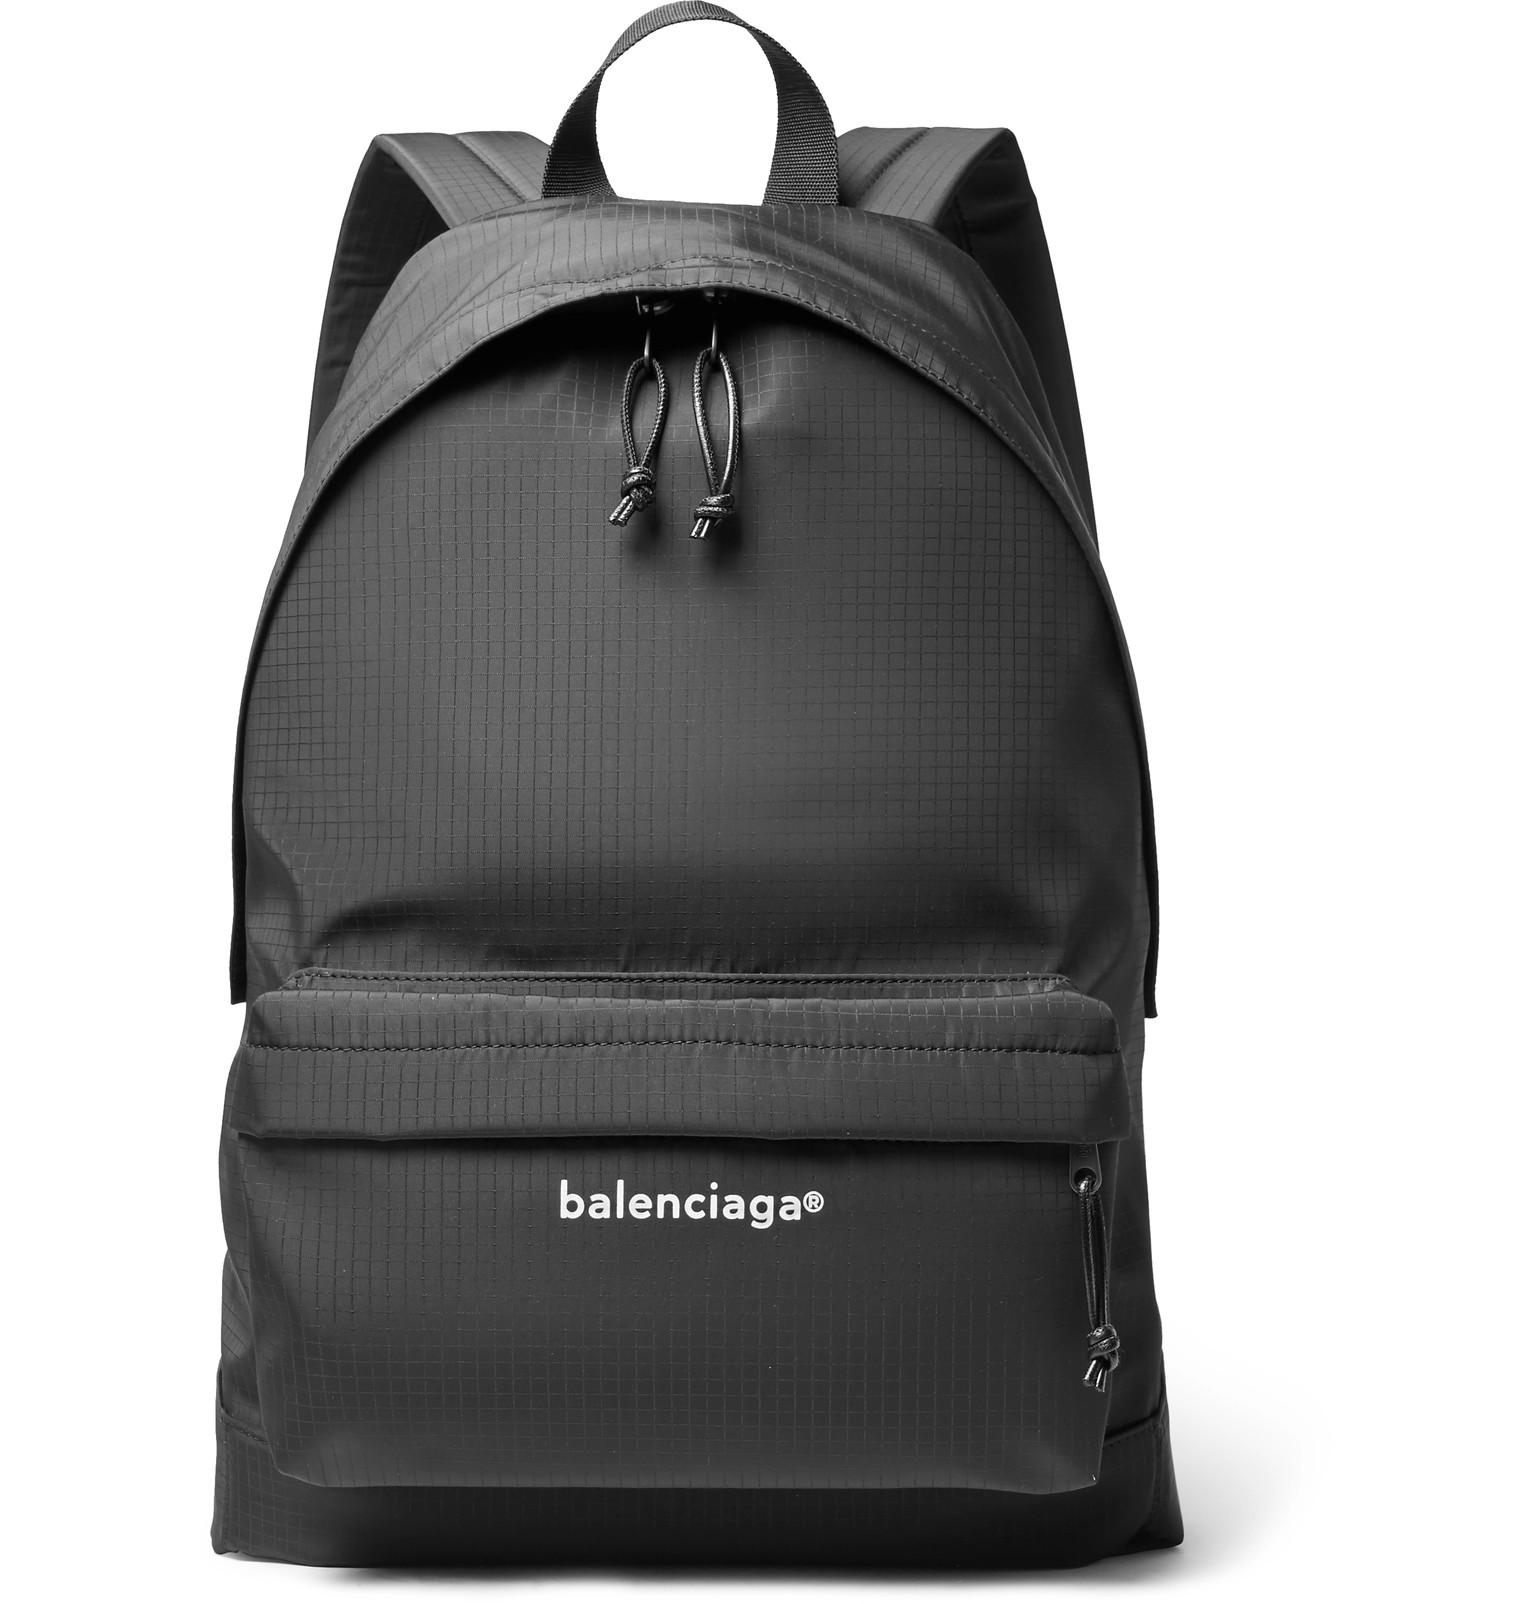 Balenciaga Denim Explorer Printed Ripstop Backpack in Black for Men - Lyst